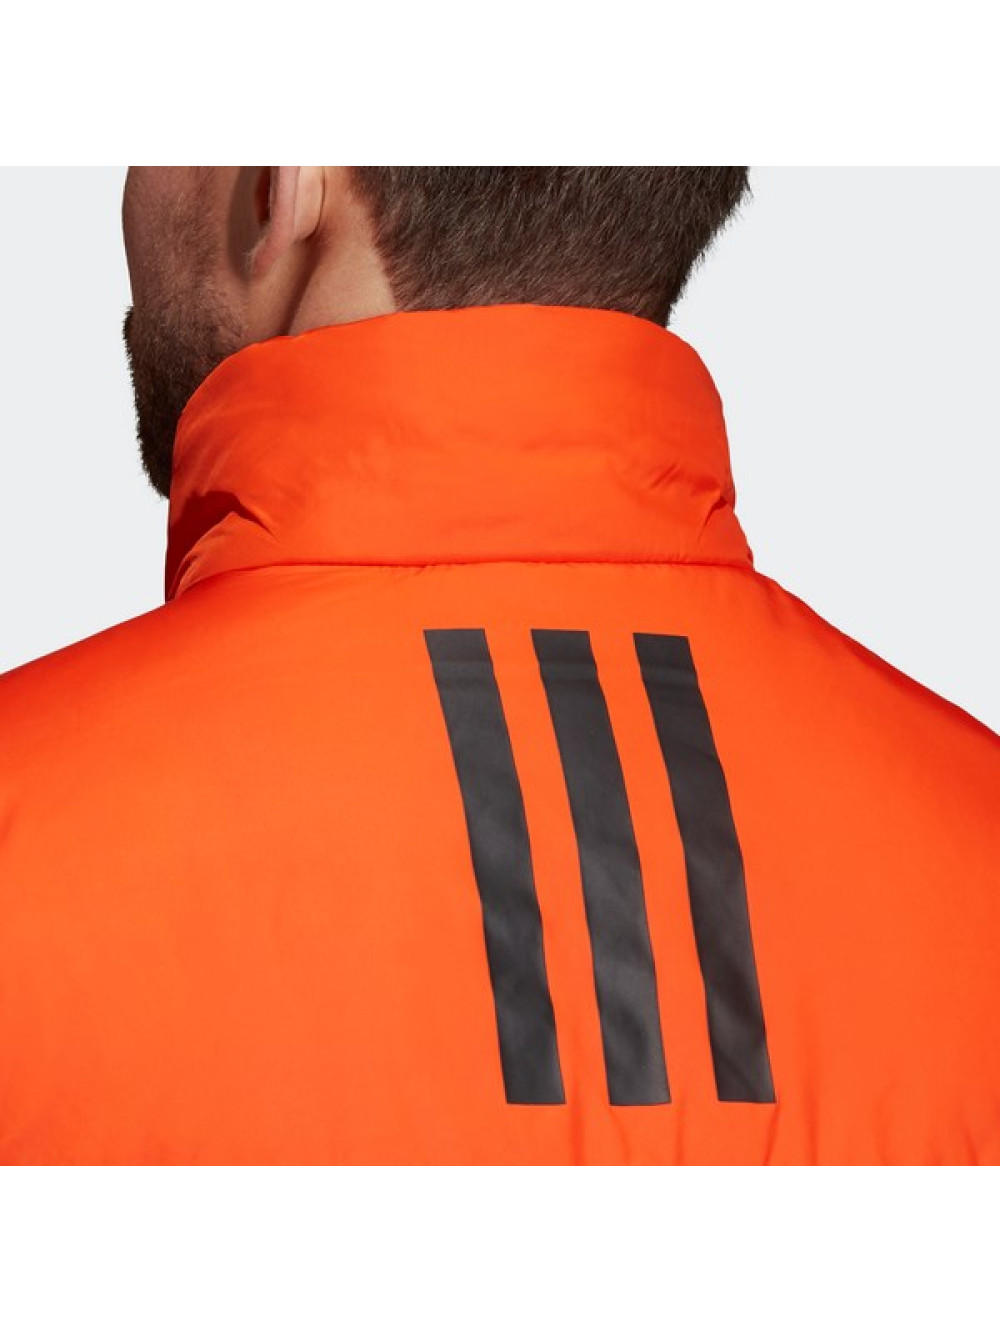 Adidas BSC 3 csíkos Férfi kabát